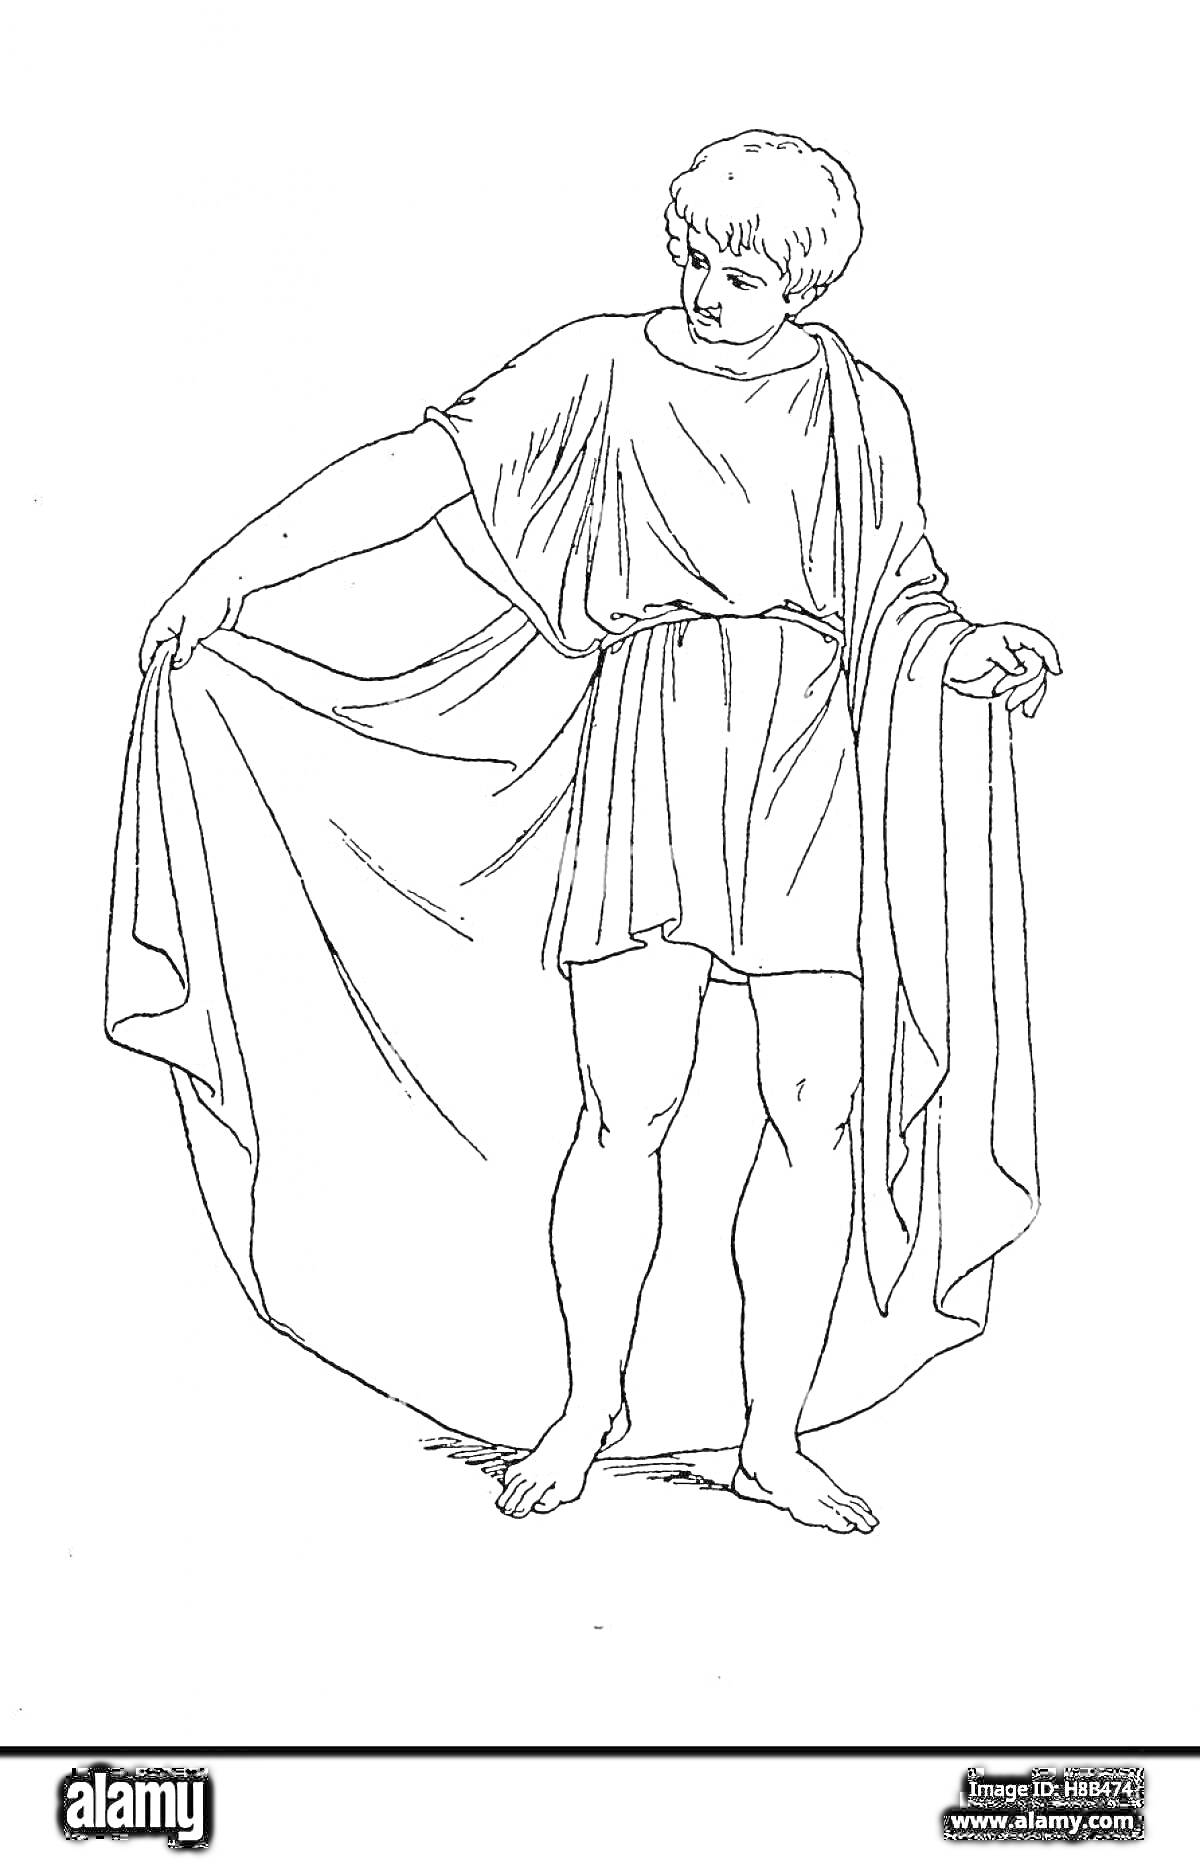 Раскраска Древнегреческий мужчина в хитоне и гиматии